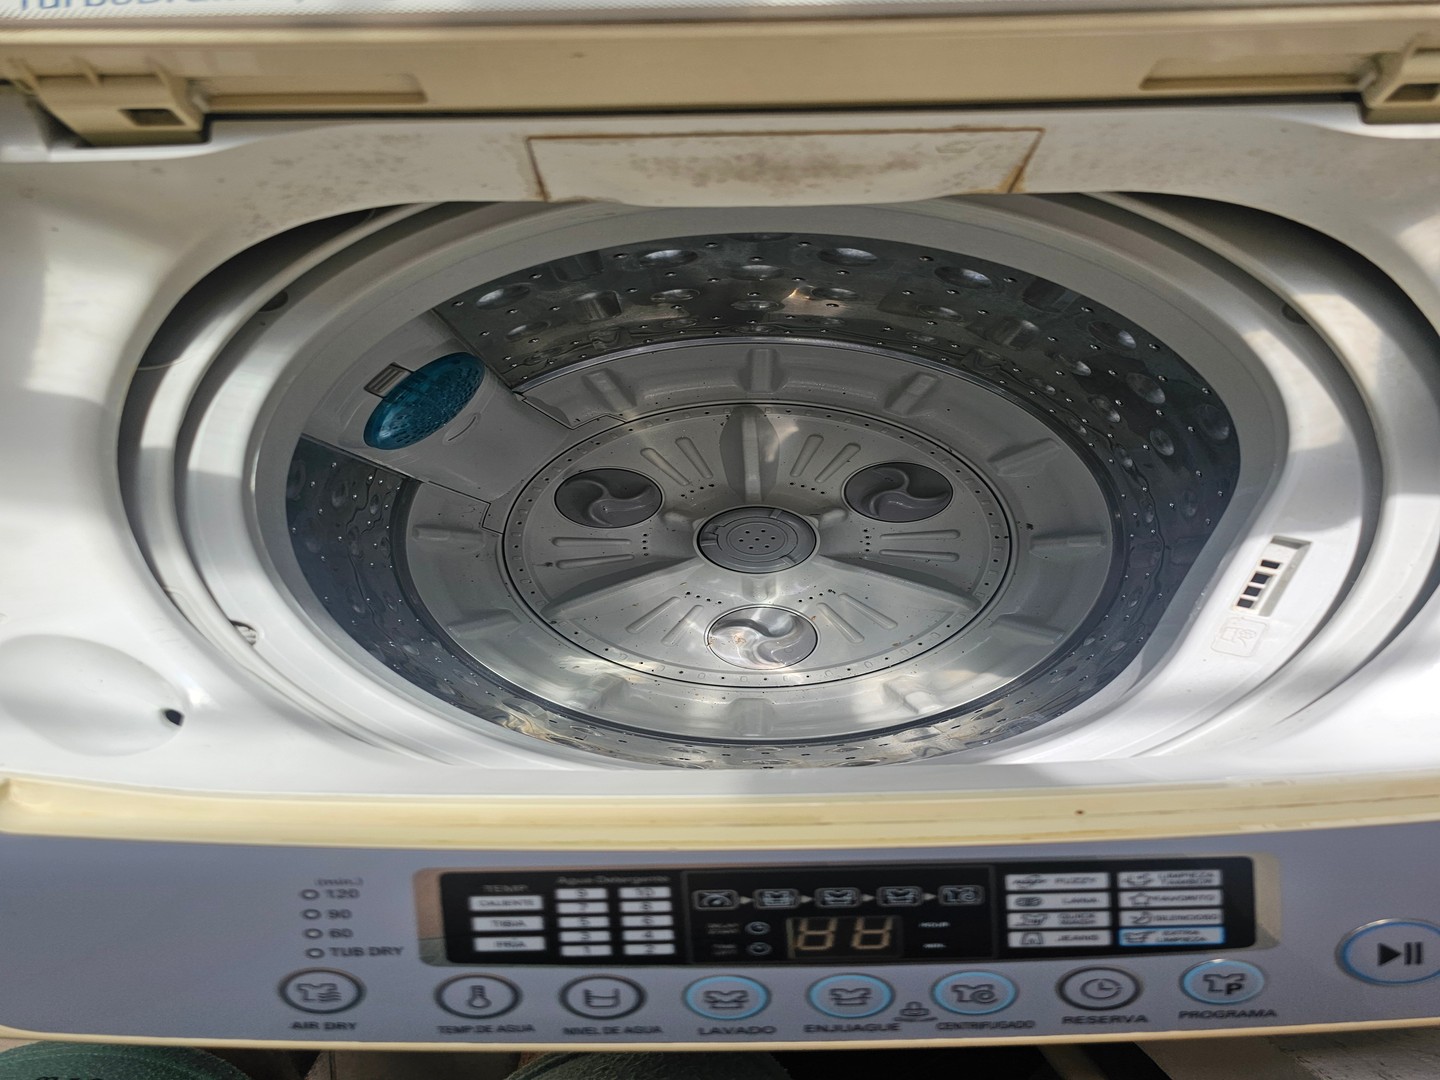 electrodomesticos - Lavadora Automatica LG, blanca, 19lbs, lavado poderoso 5